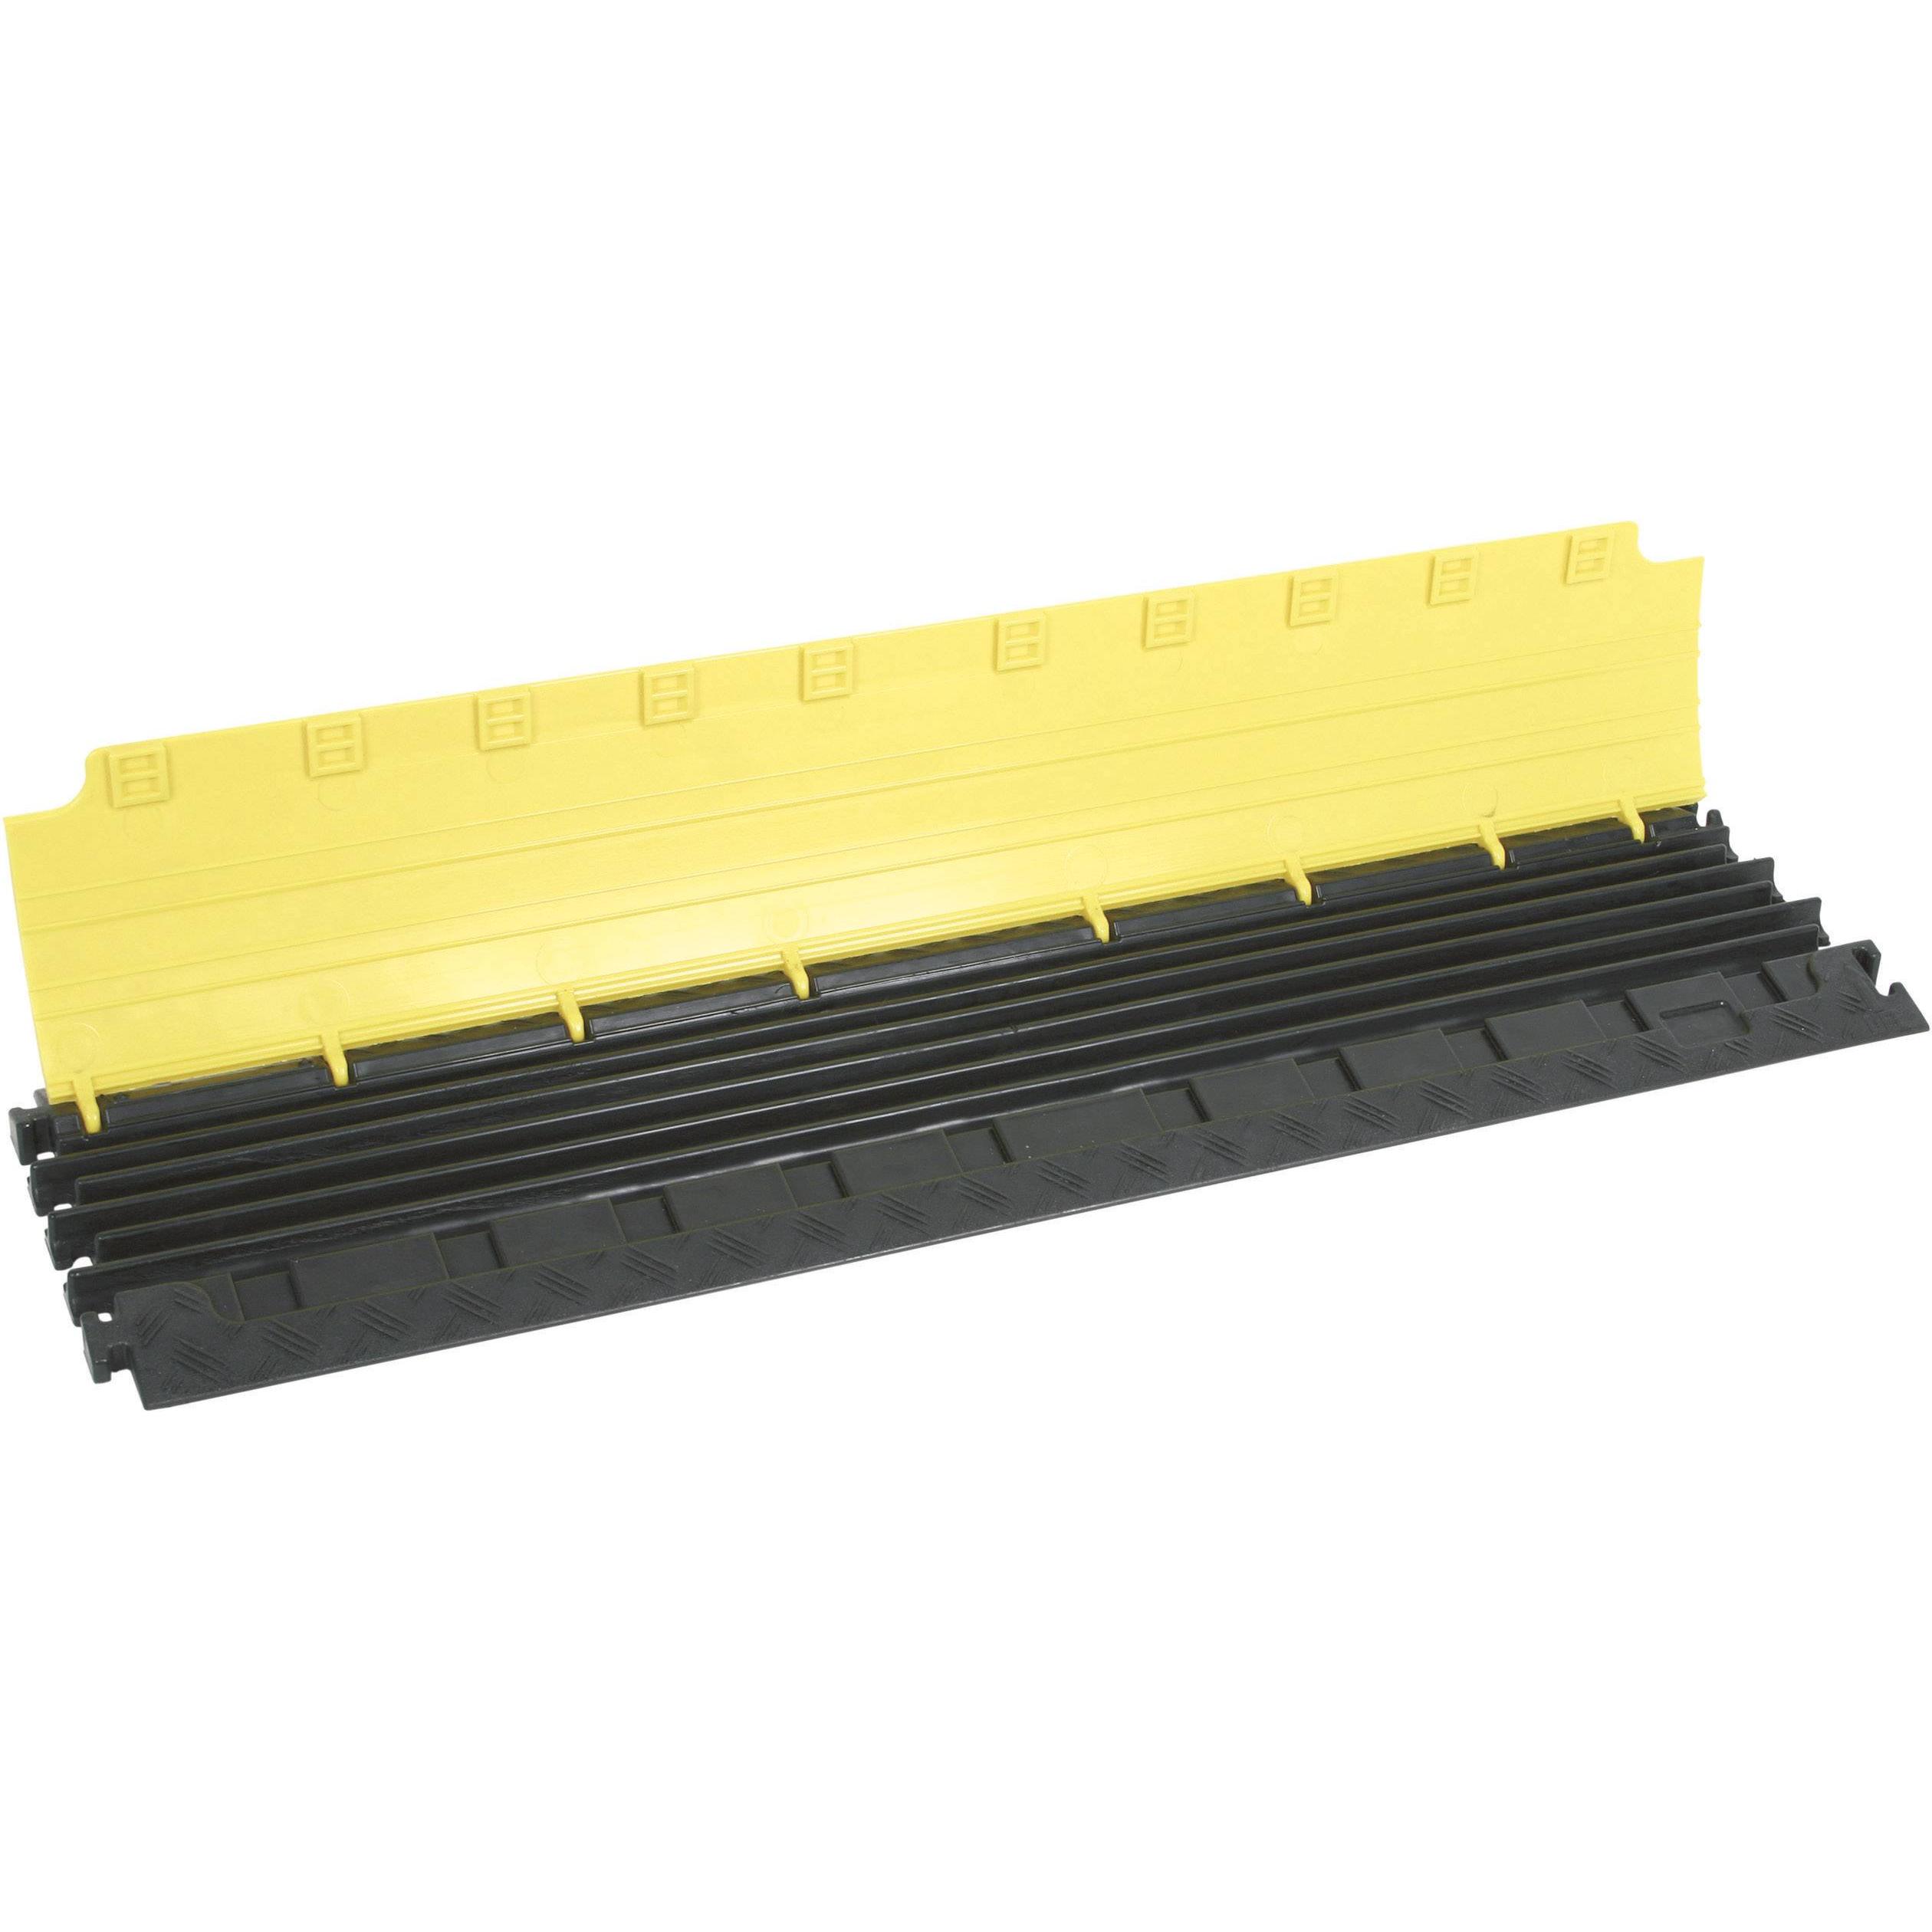 DEFENDER by Adam Hall kabelový můstek 85150 termoplastický polyuretan (TPU)  černá, žlutá Kanálů: 1010 mm Množství: ks